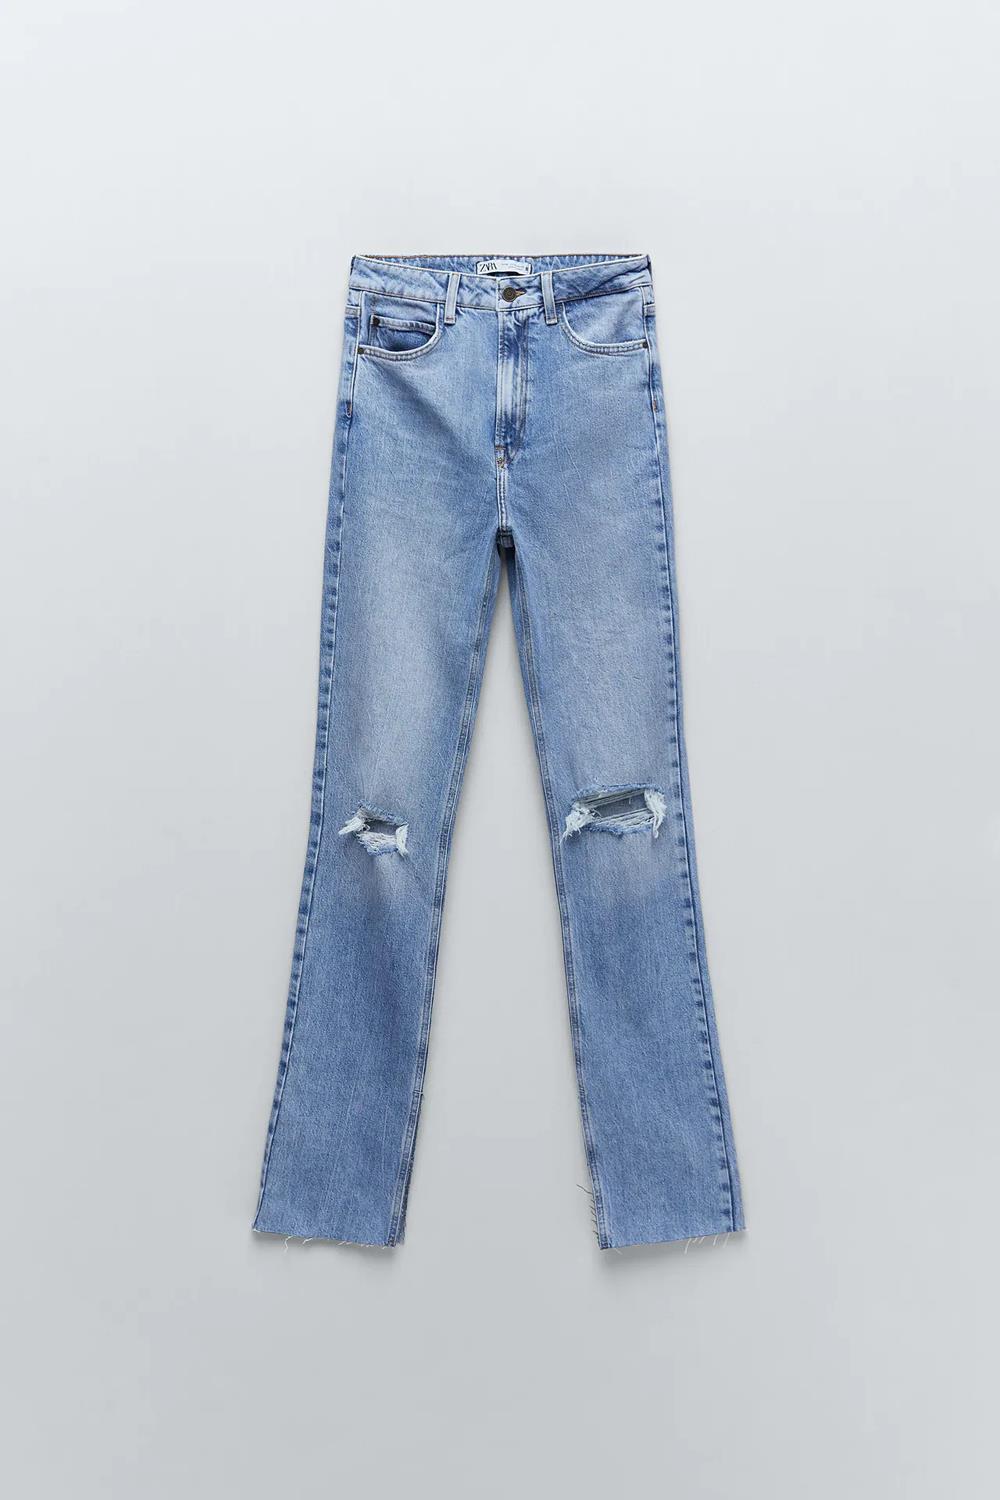 Jeans rotos de corte flare, de Zara